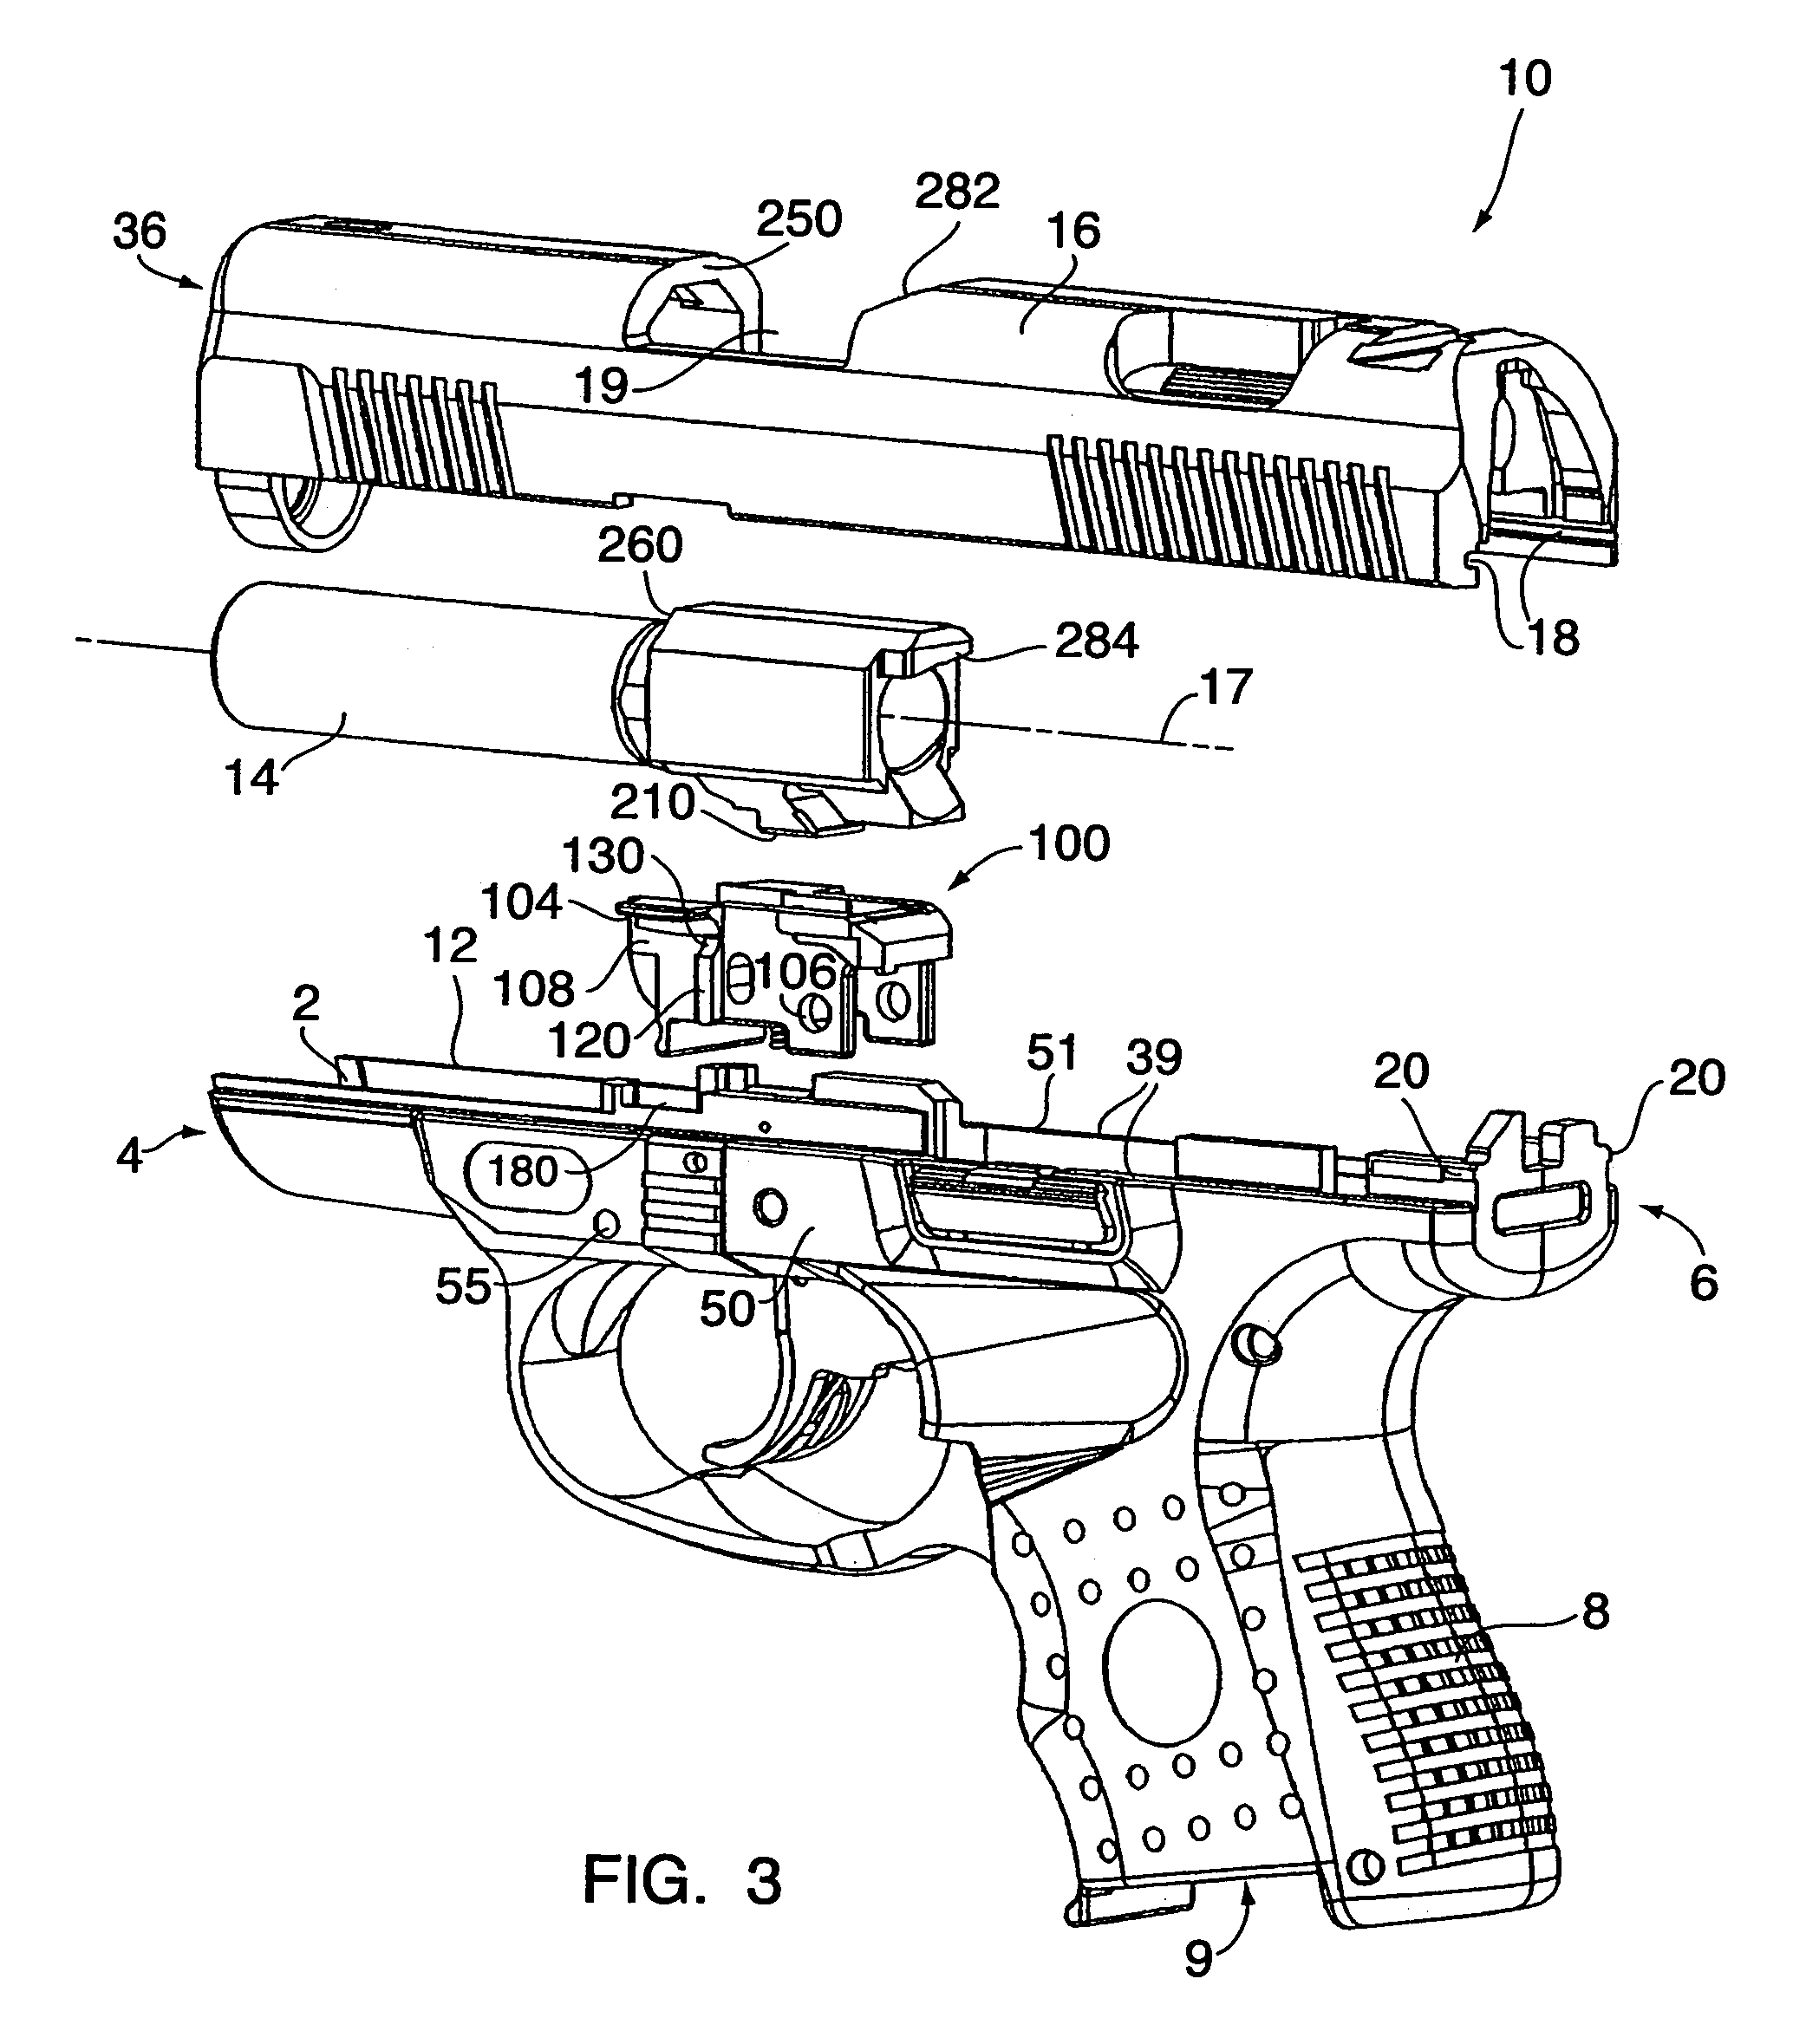 Locking block for compact semi-automatic pistols